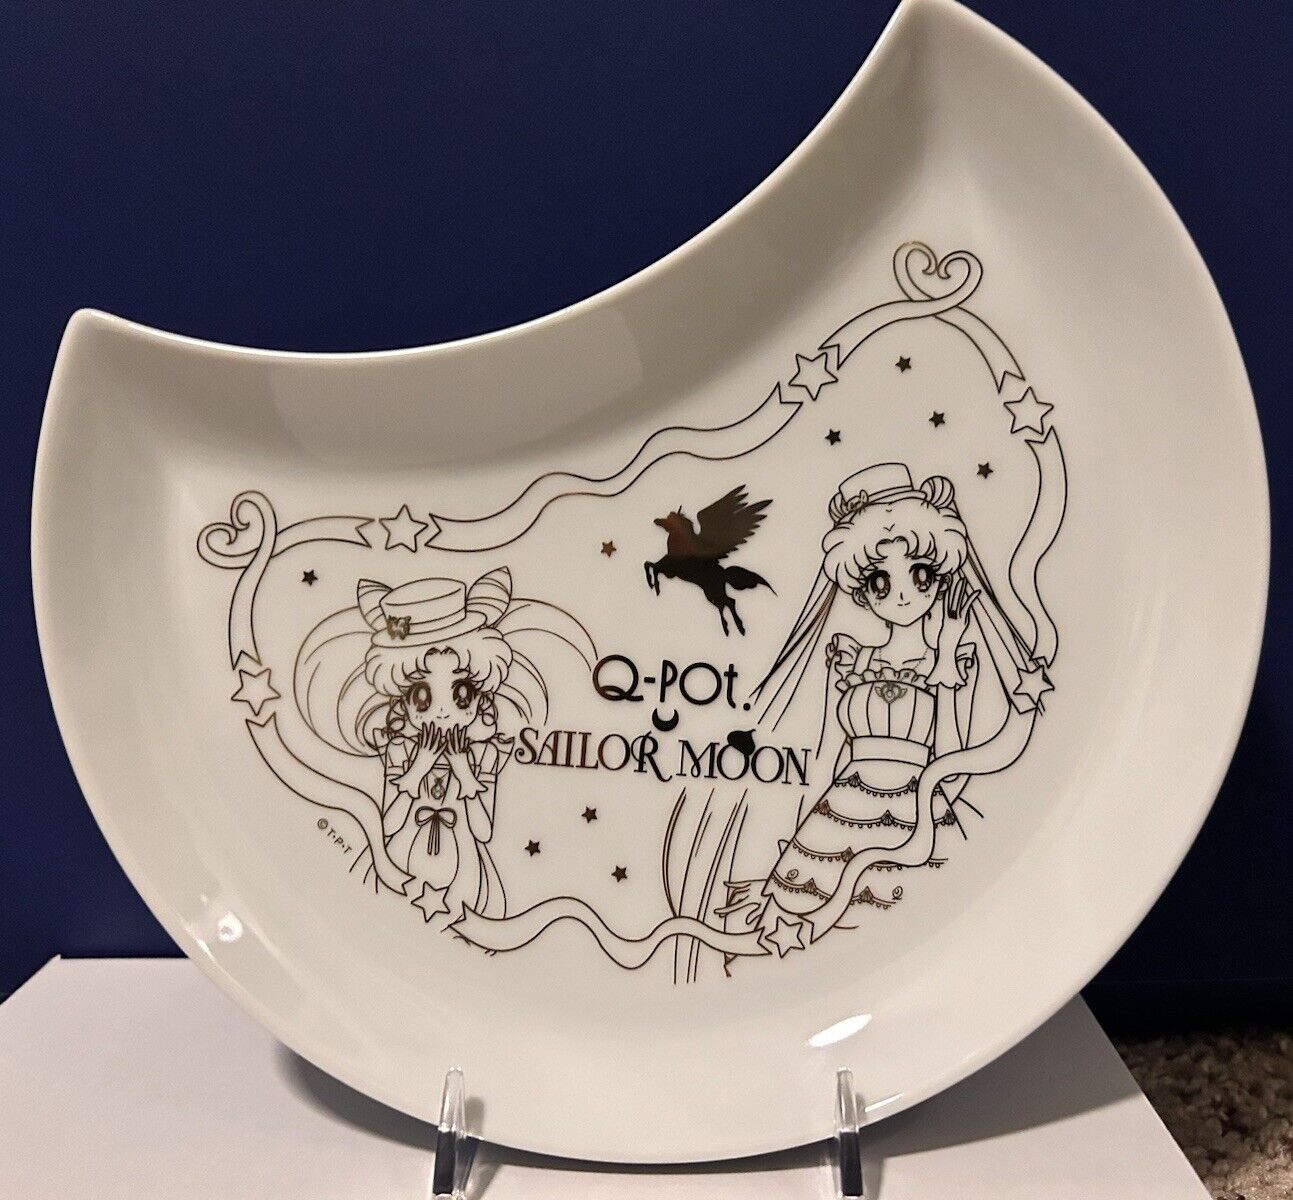 Sailor Moon x Q-Pot Cafe Collaboration Plate in Original Box - Crescent Moon